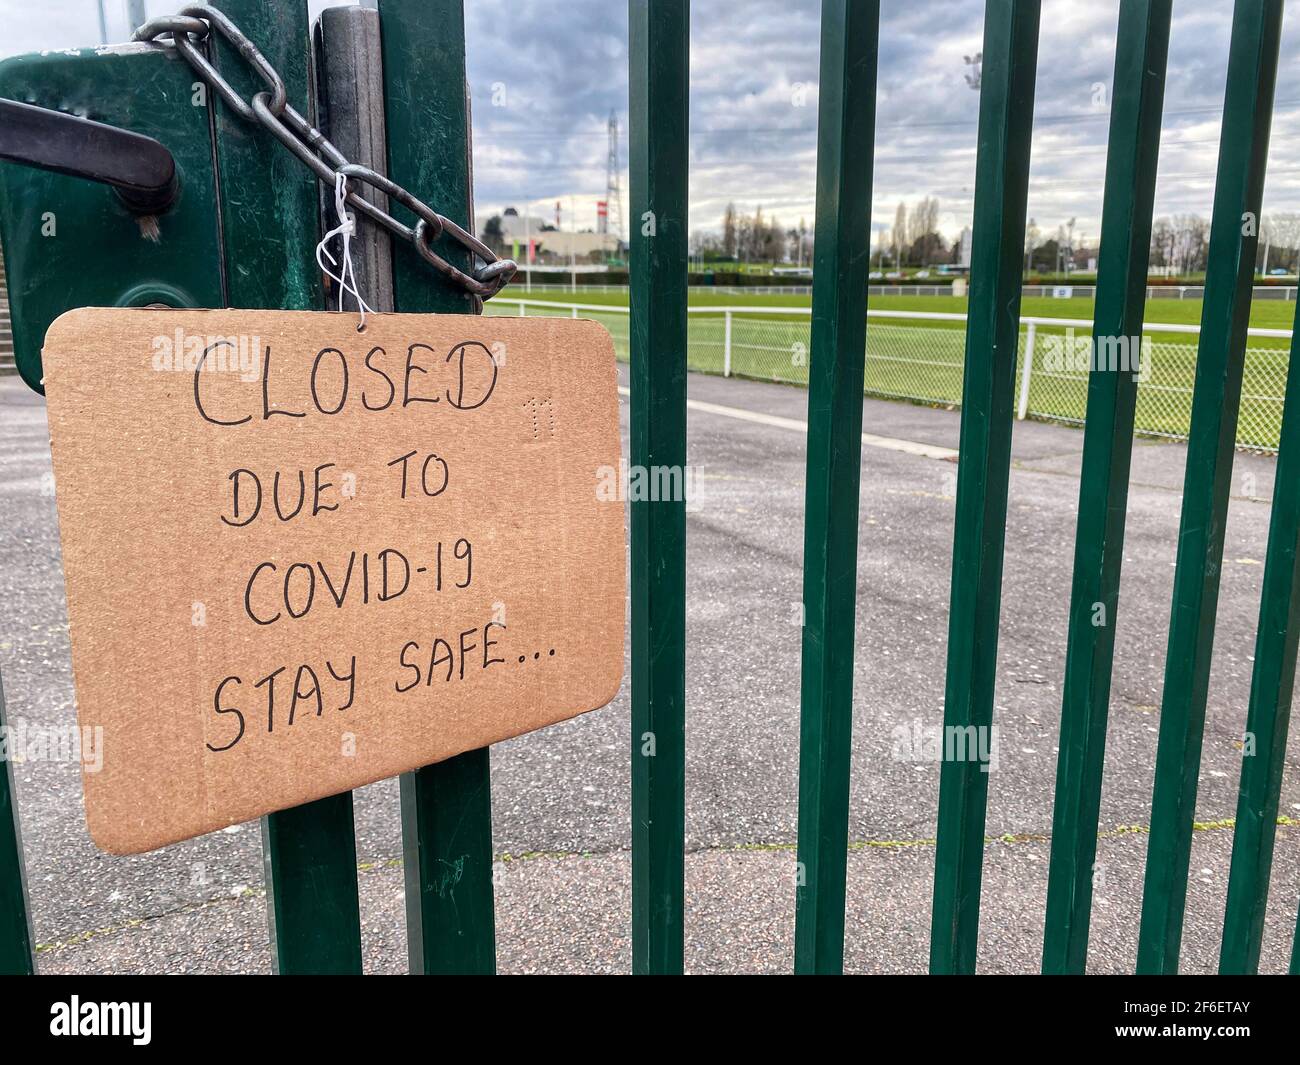 Playground closed due to covid19 coronavirus pandemic. Sports facilities closed to prevent virus spread. Non essential commerce shops also shutdown. Stock Photo